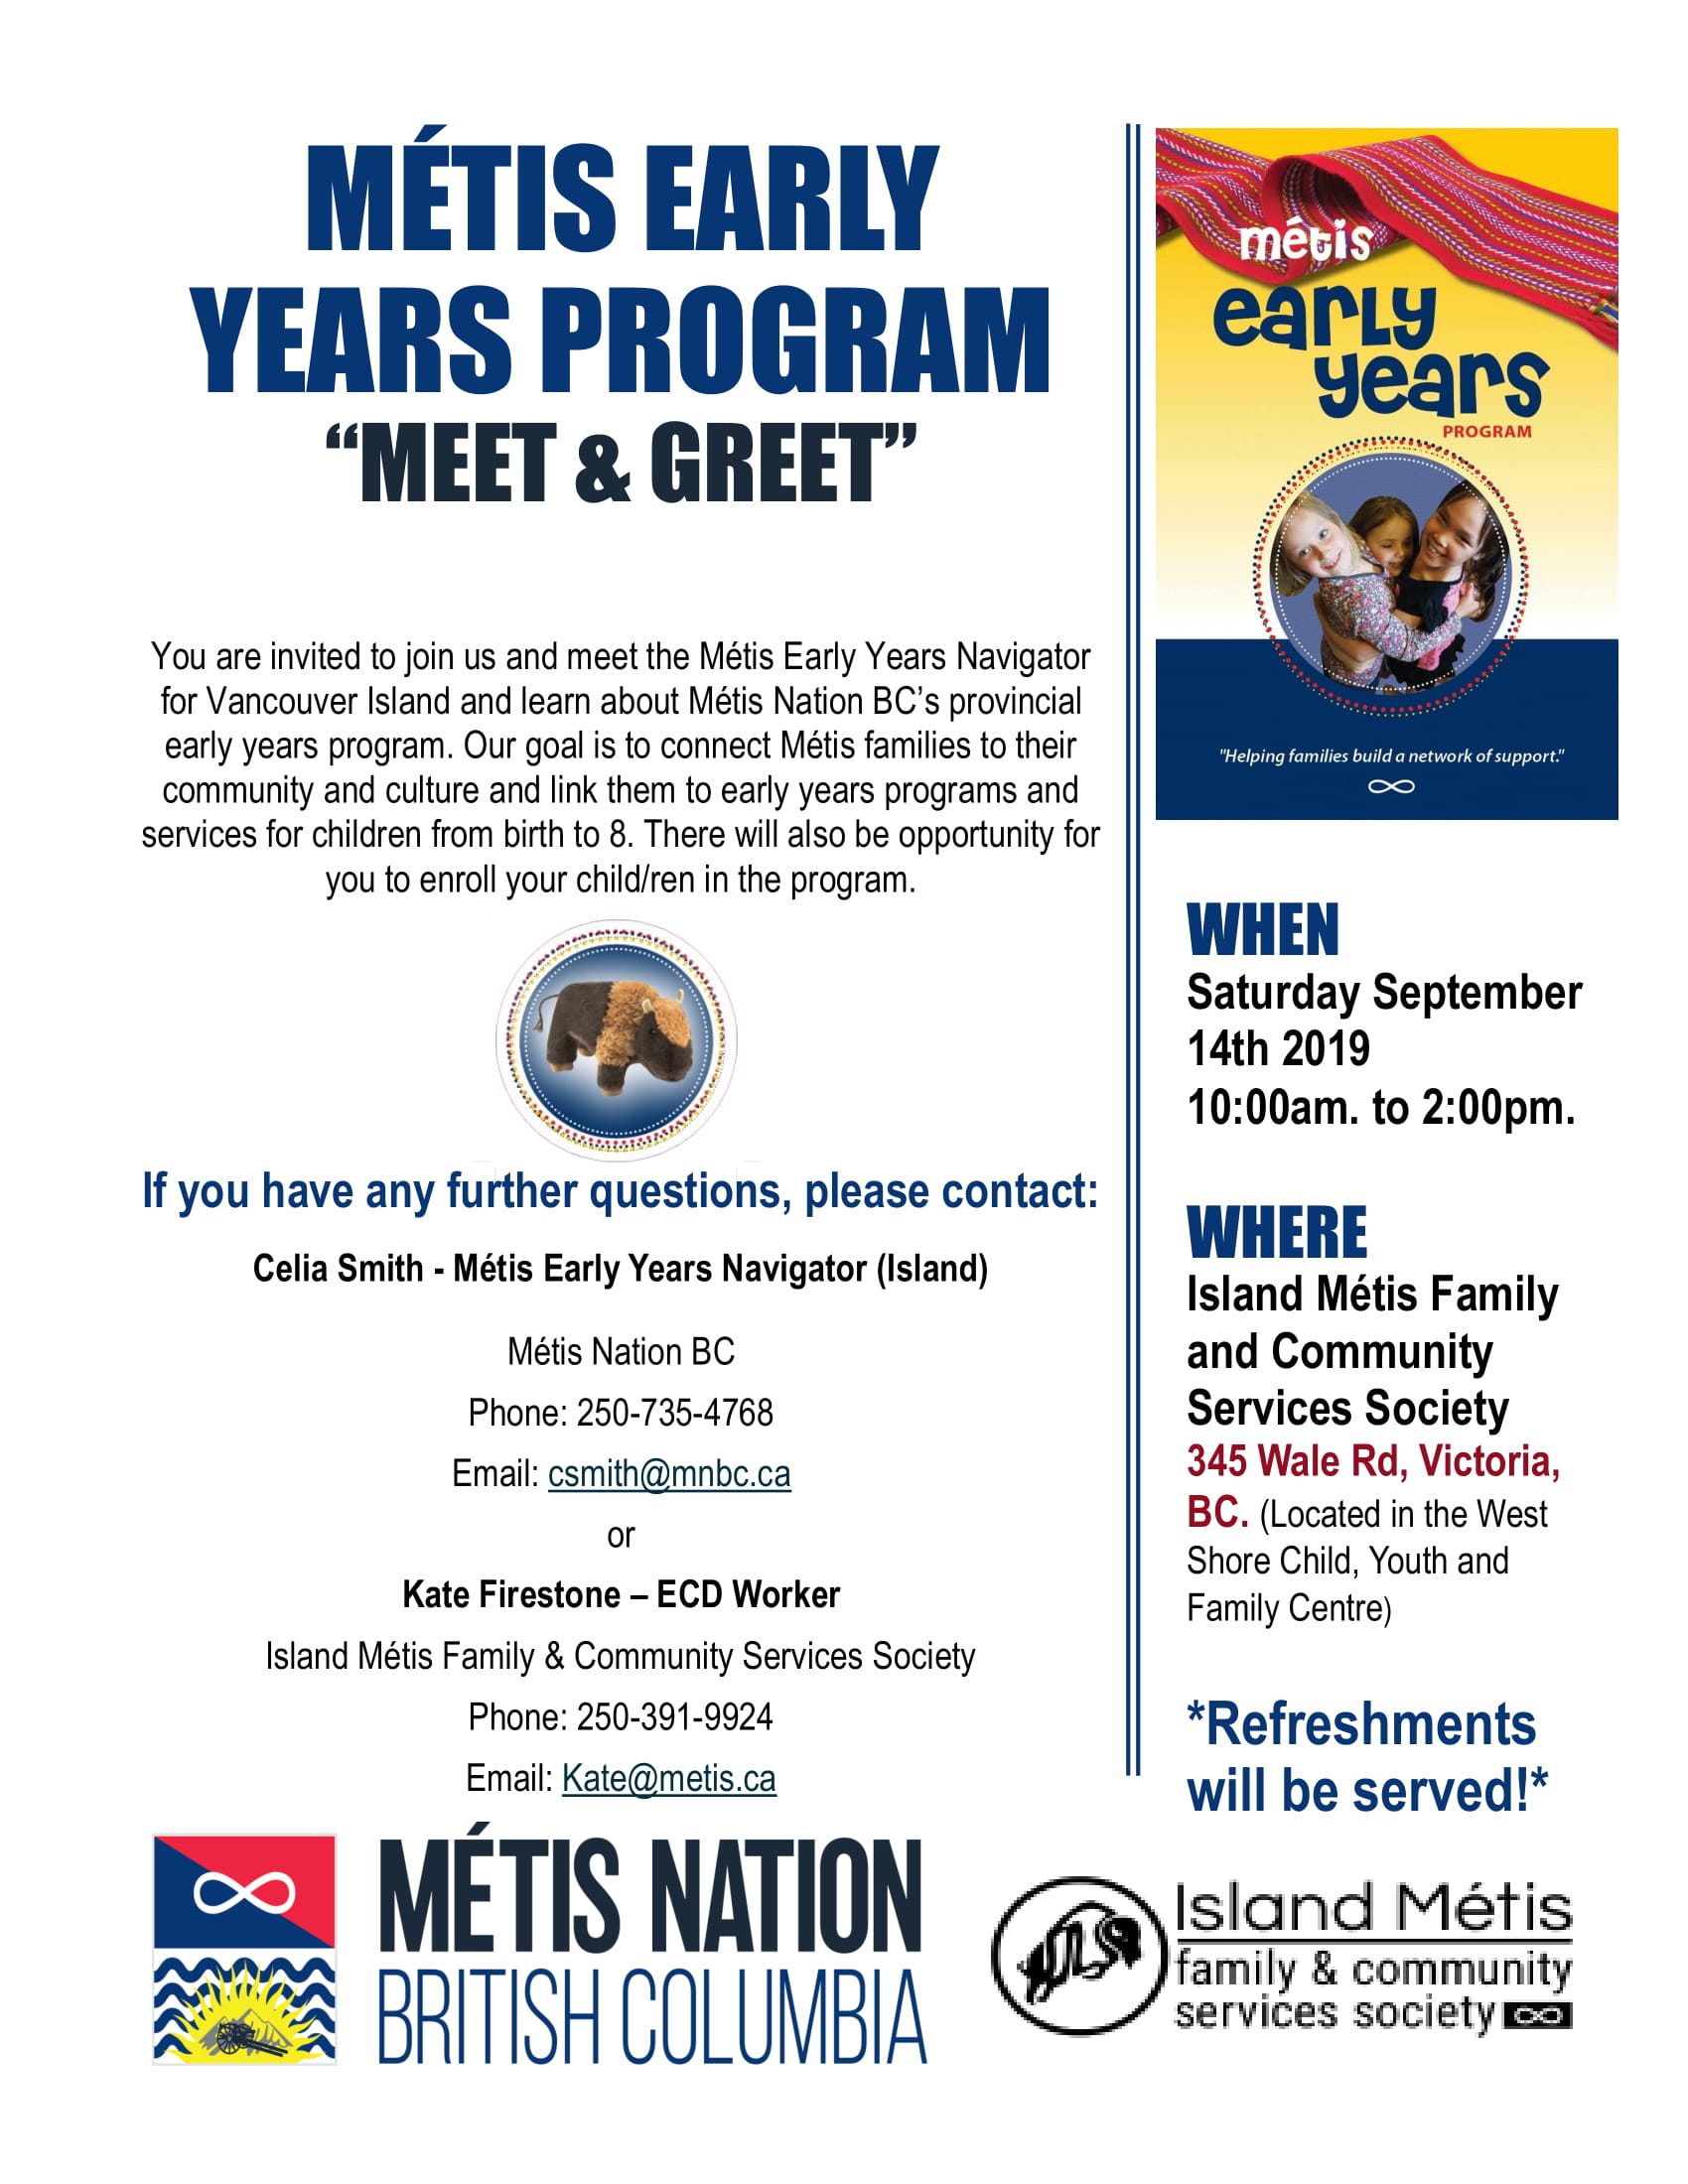 Métis Early Years Program "Meet & Greet" Sept 14